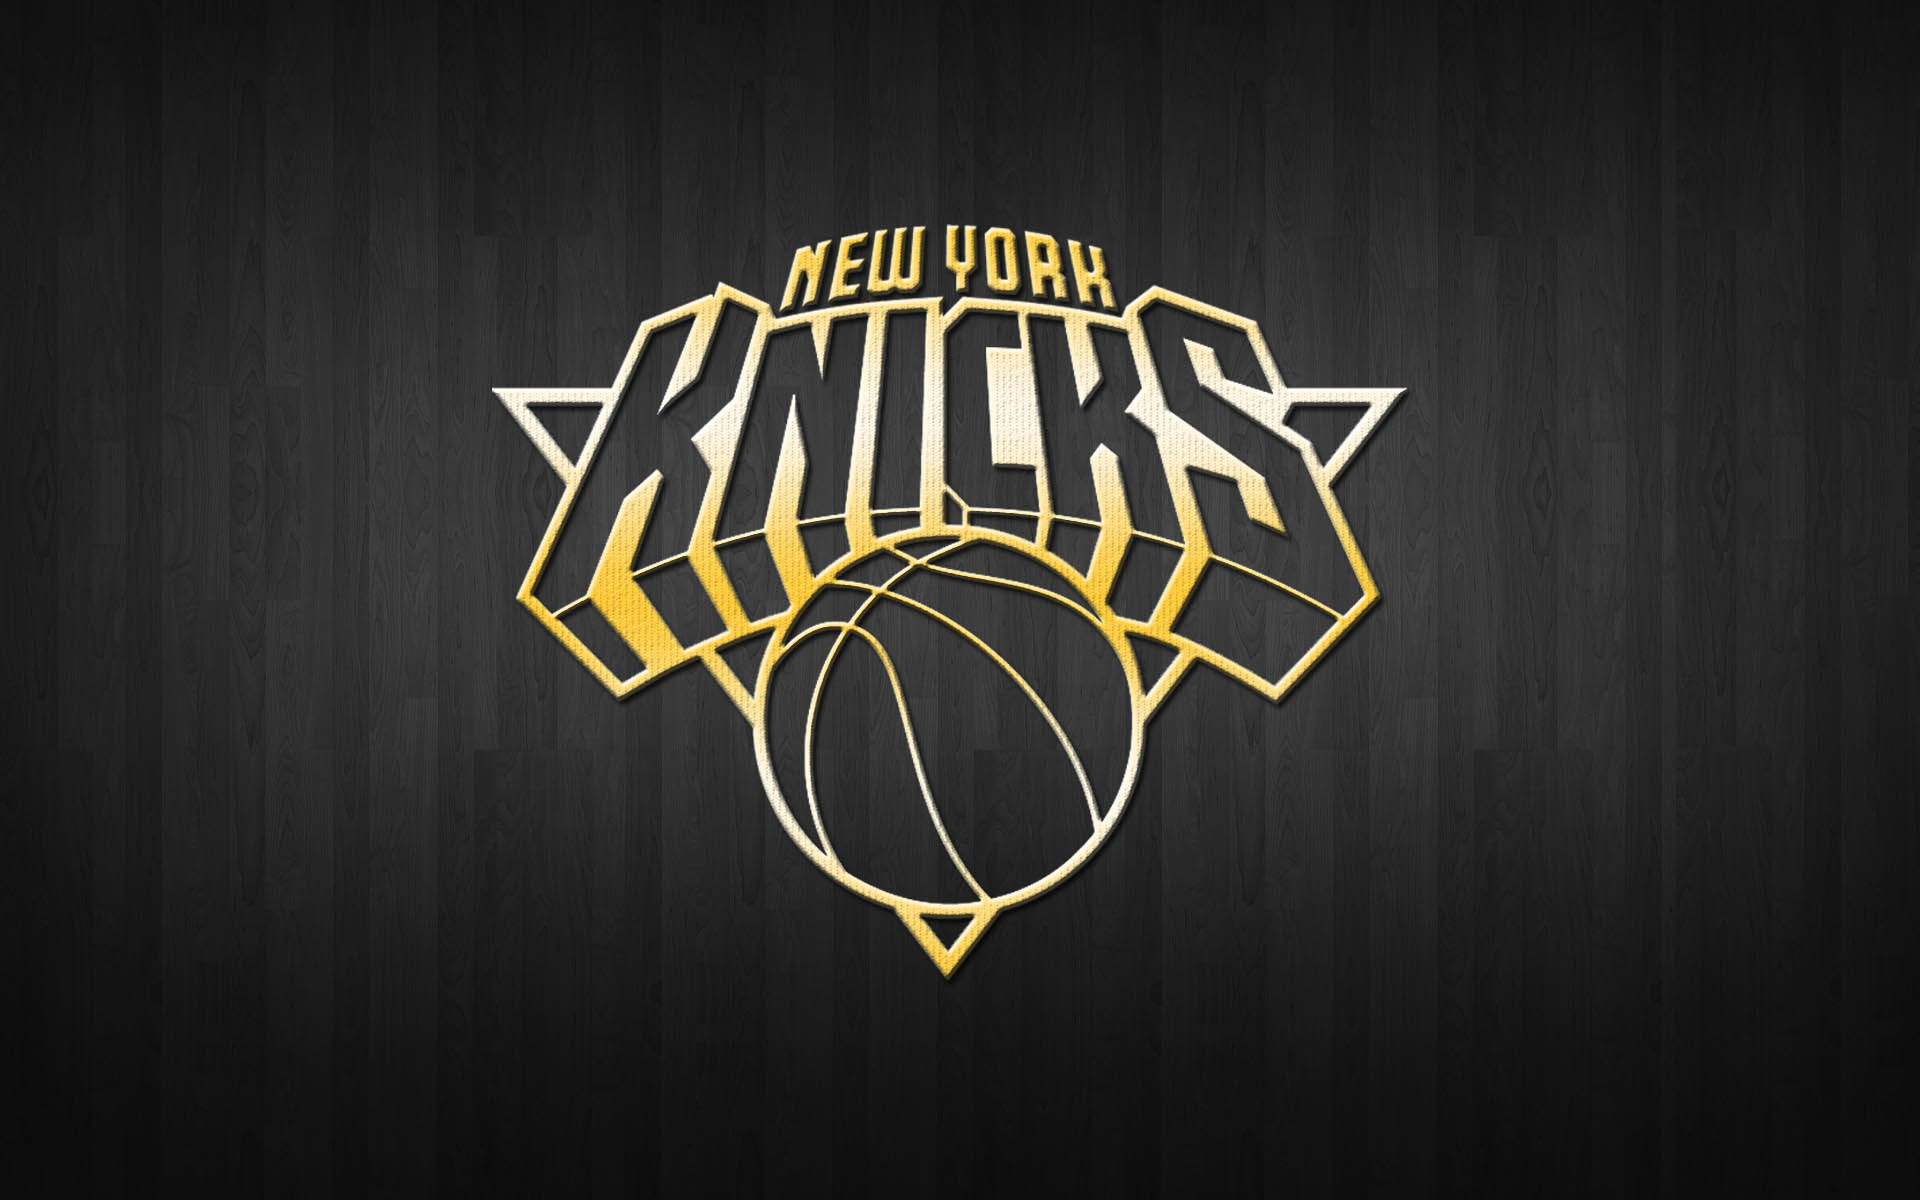 Liverpool Fc Wallpapers - New York Knicks Wallpaper Iphone - HD Wallpaper 